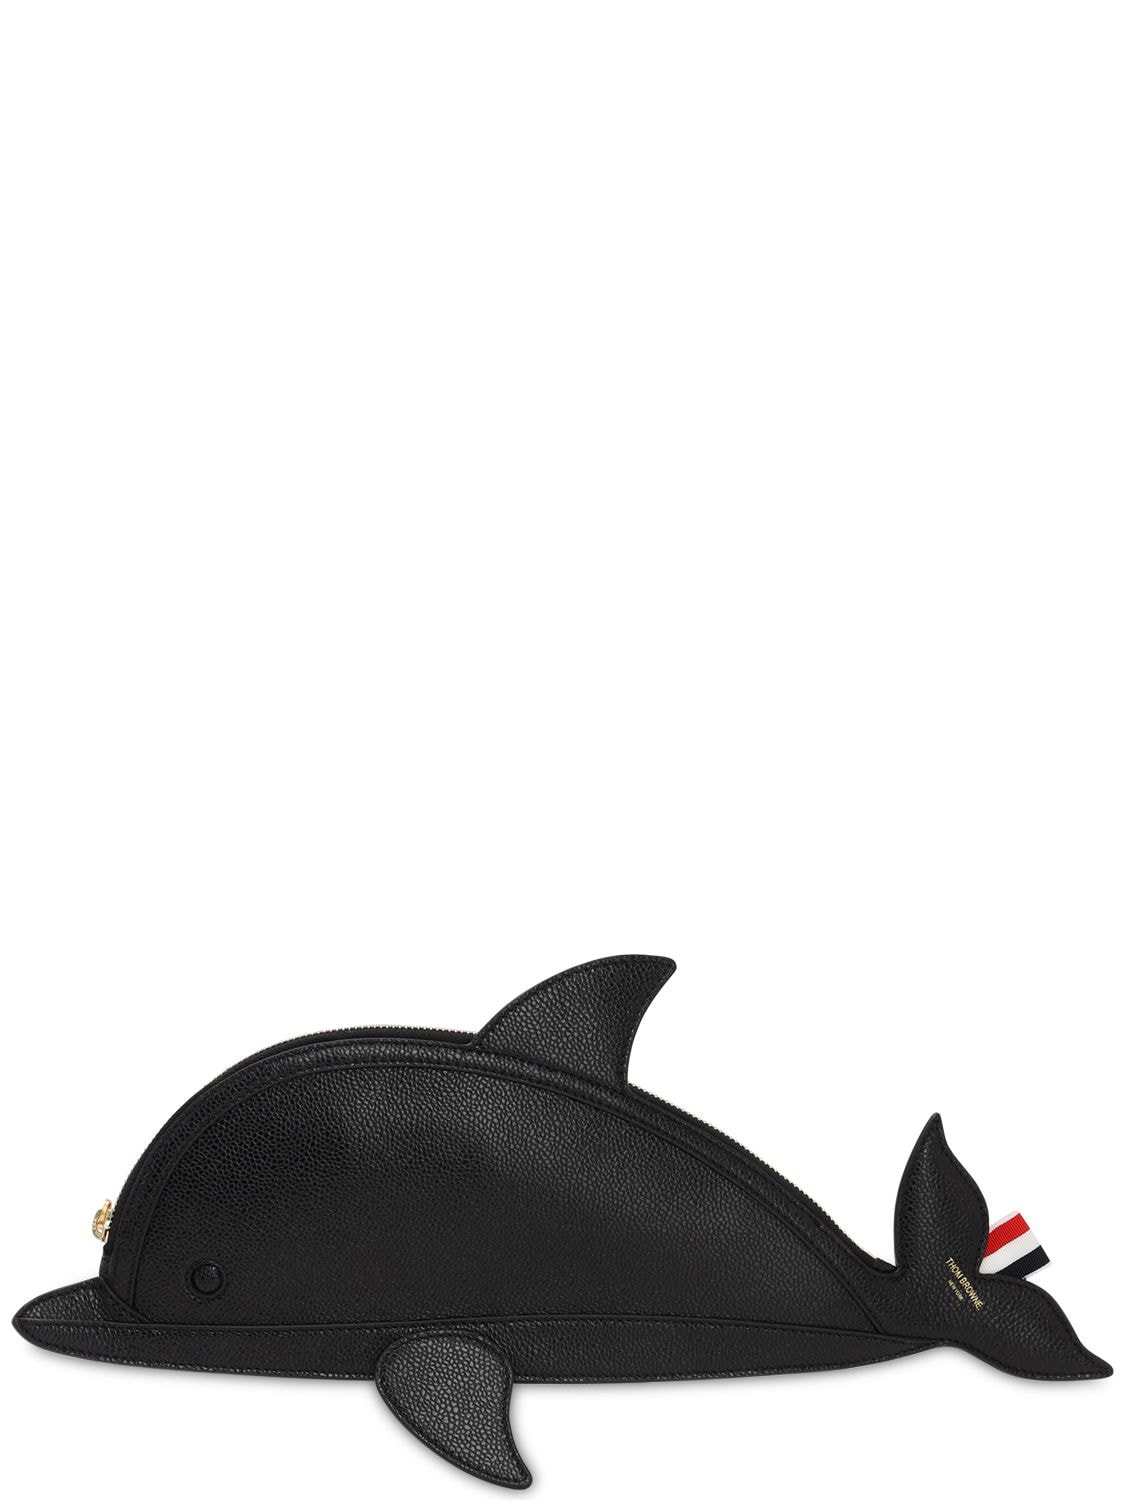 THOM BROWNE 粒面皮革海豚形状手拿包,71IWV8003-MDAX0